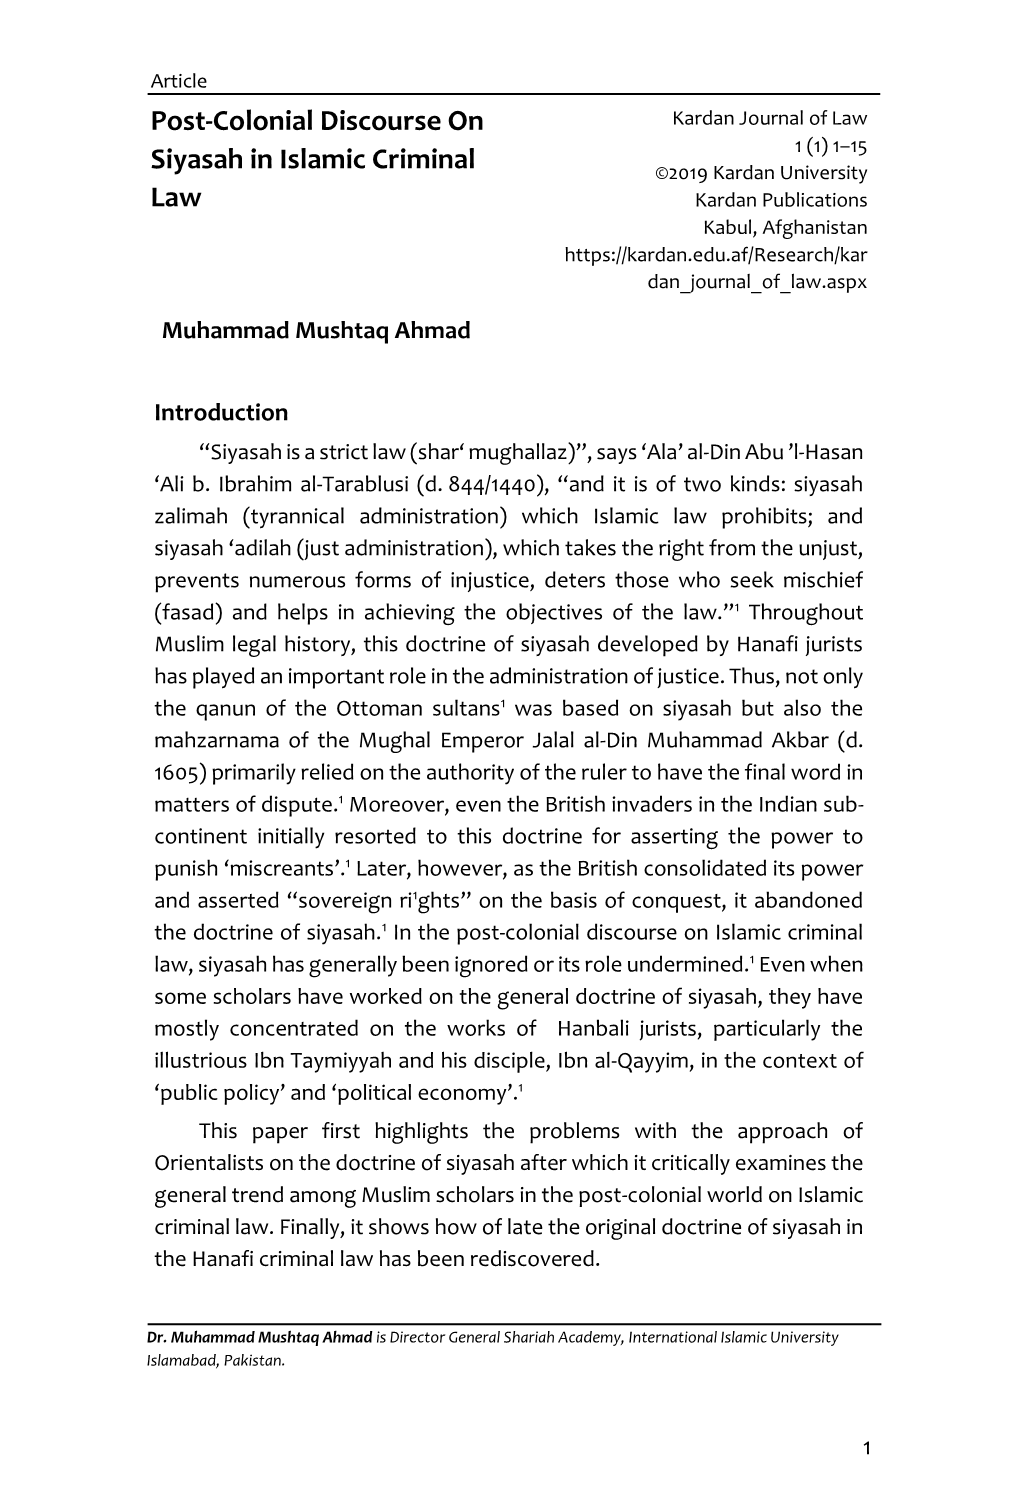 Post-Colonial Discourse on Siyasah in Islamic